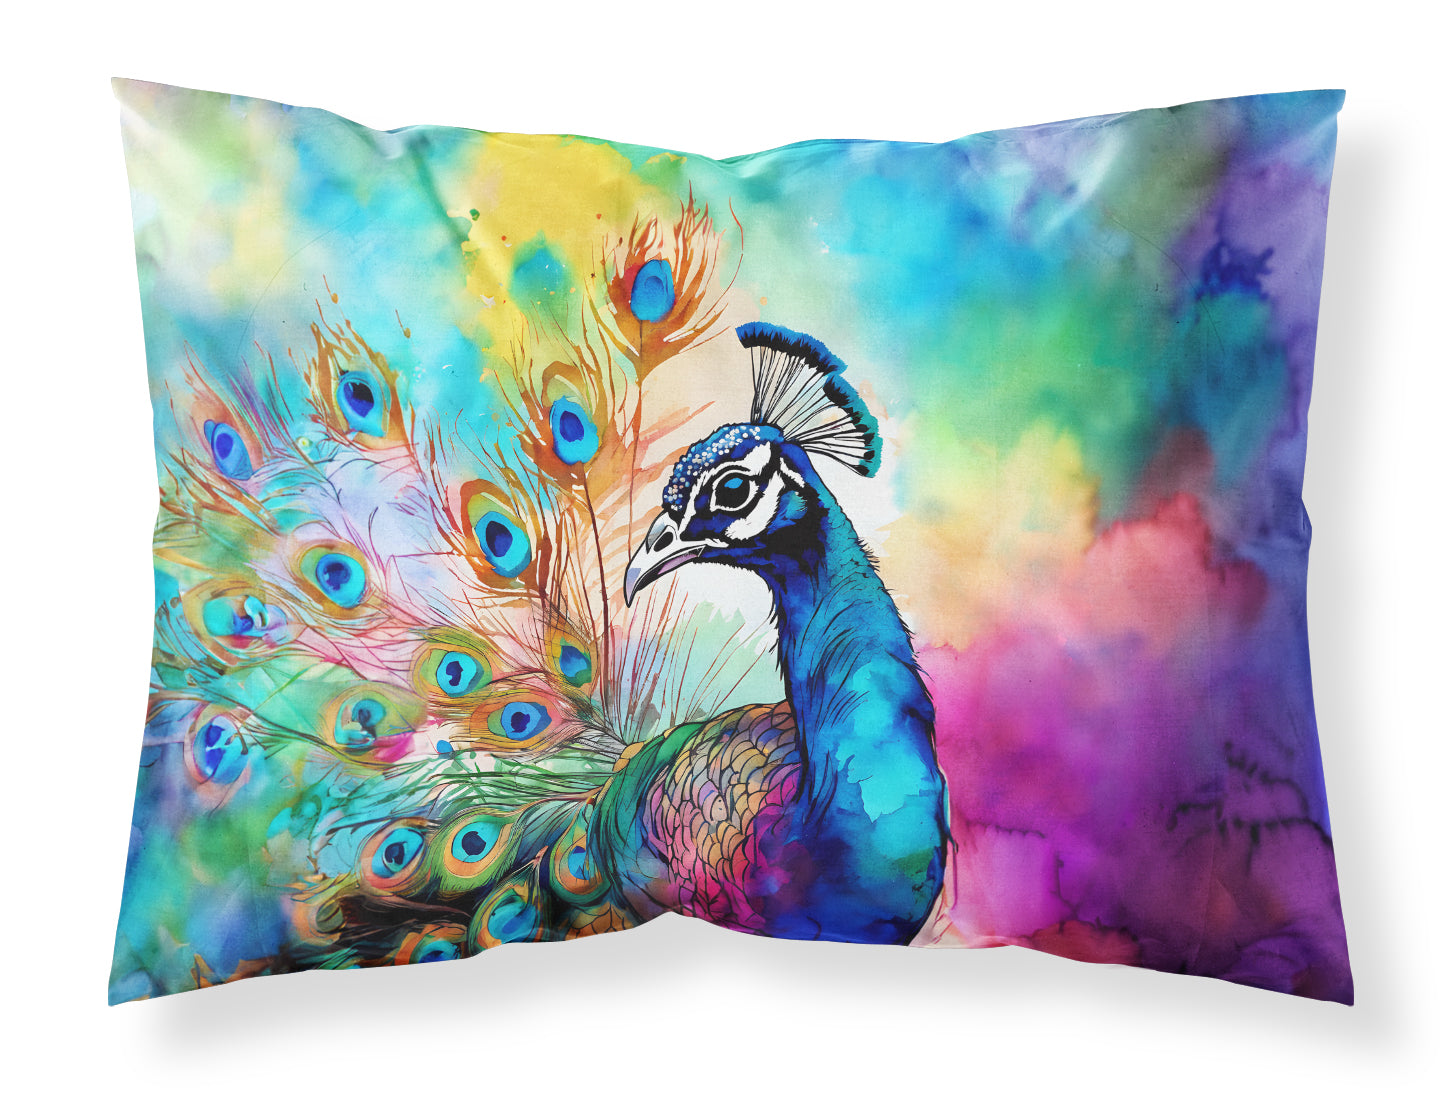 Buy this Hippie Animal Peacock Standard Pillowcase